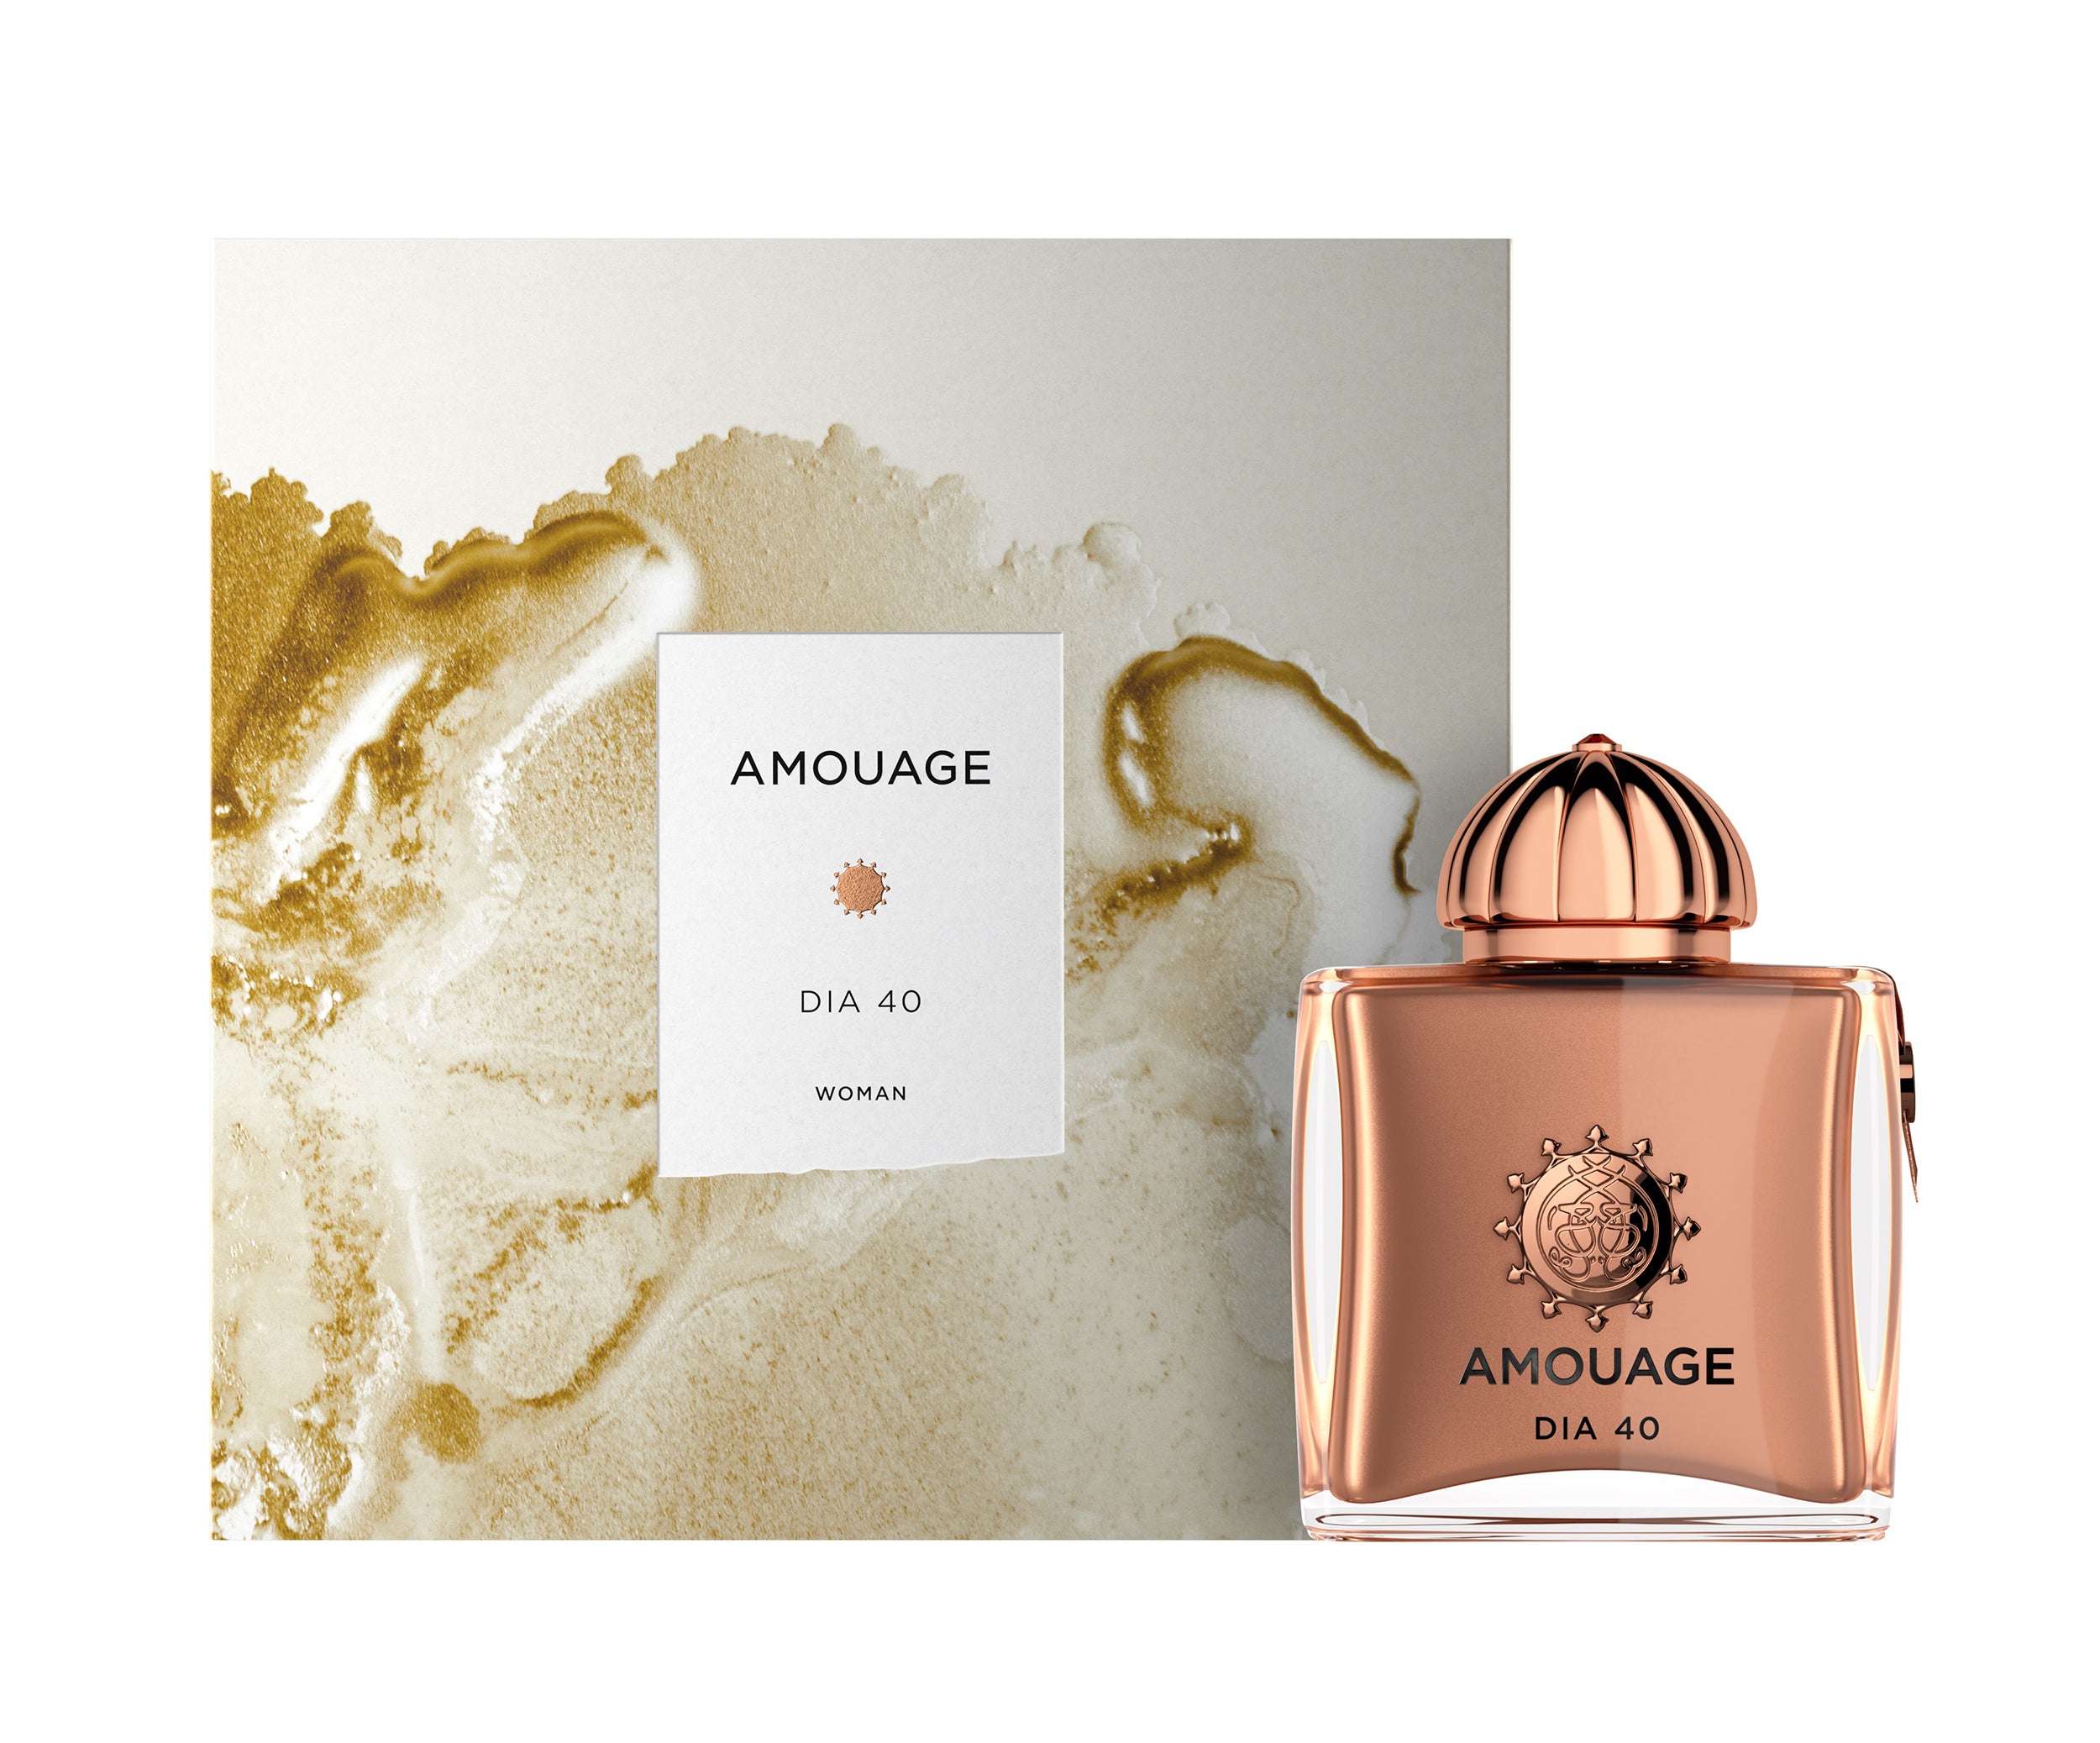 DIA 40 WOMAN perfume by Amouage